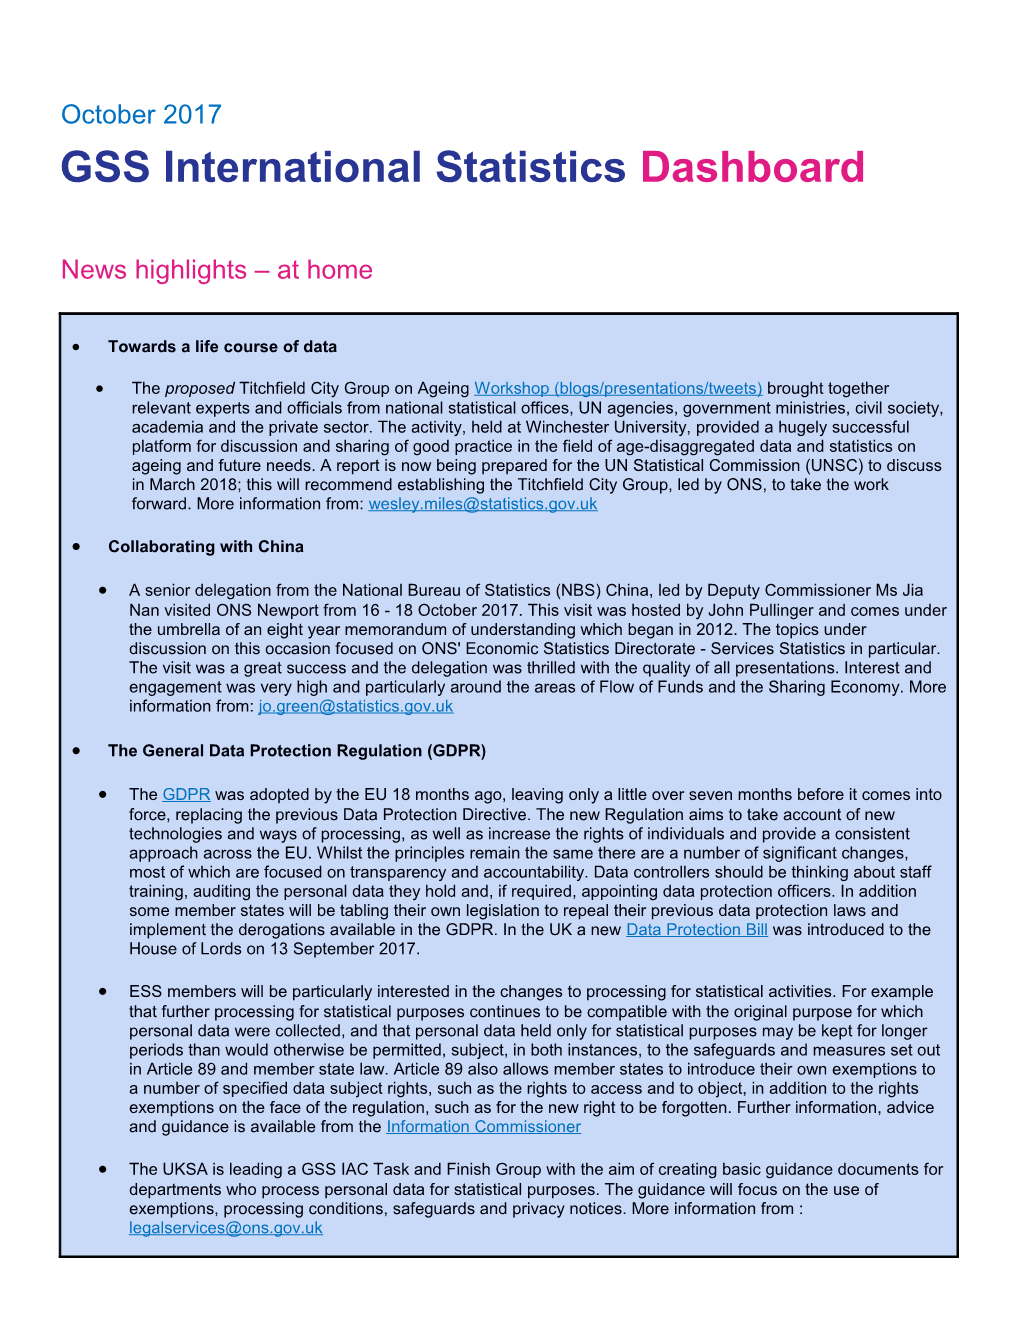 GSS International Statistics Dashboard